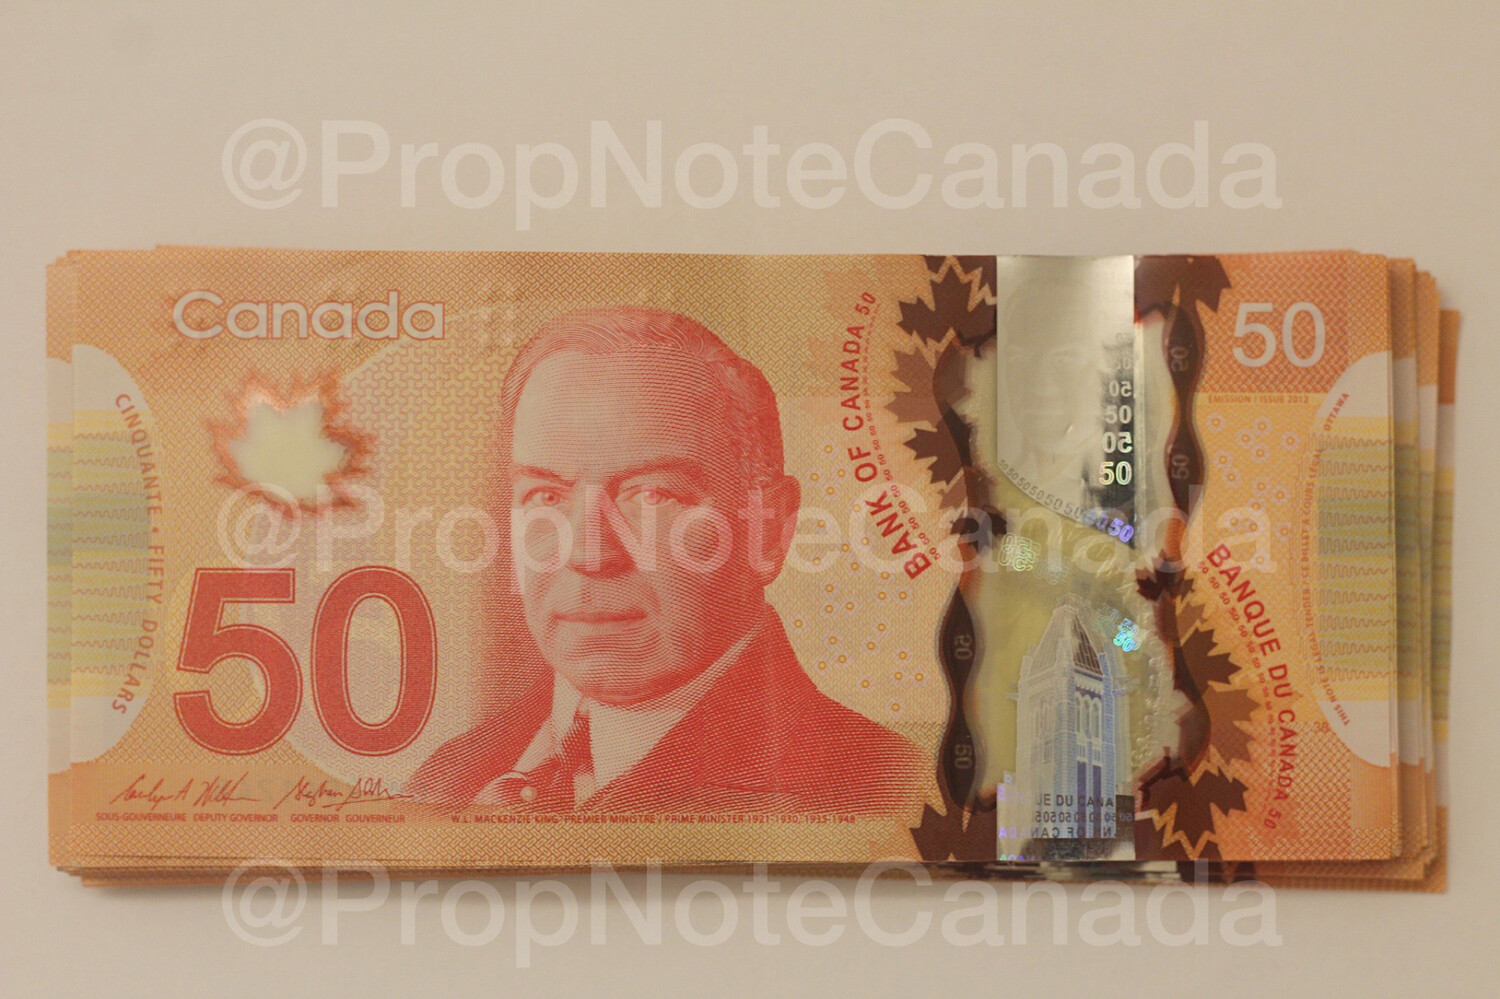 Prop Canadian $50 Bill